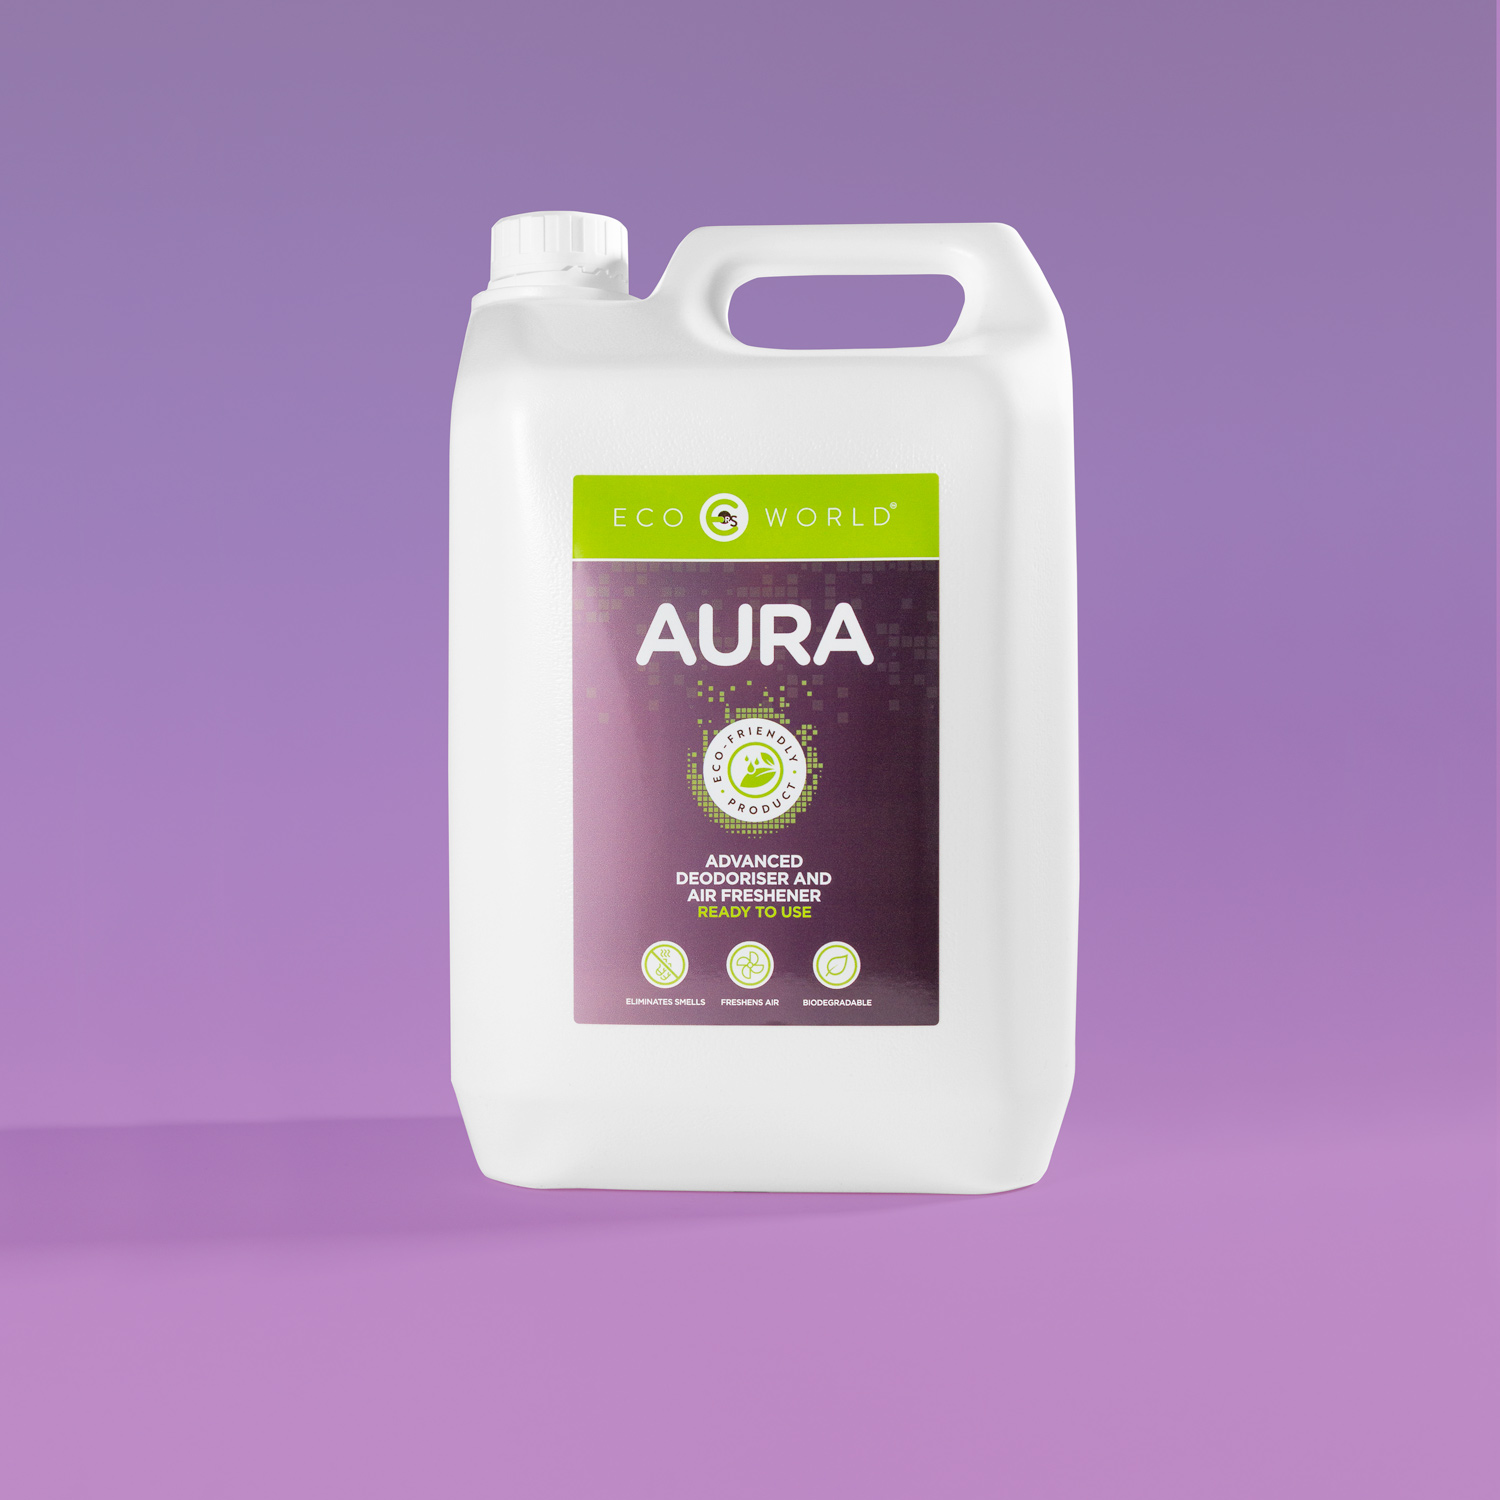 Aura 5 litre deodoriser and air freshener